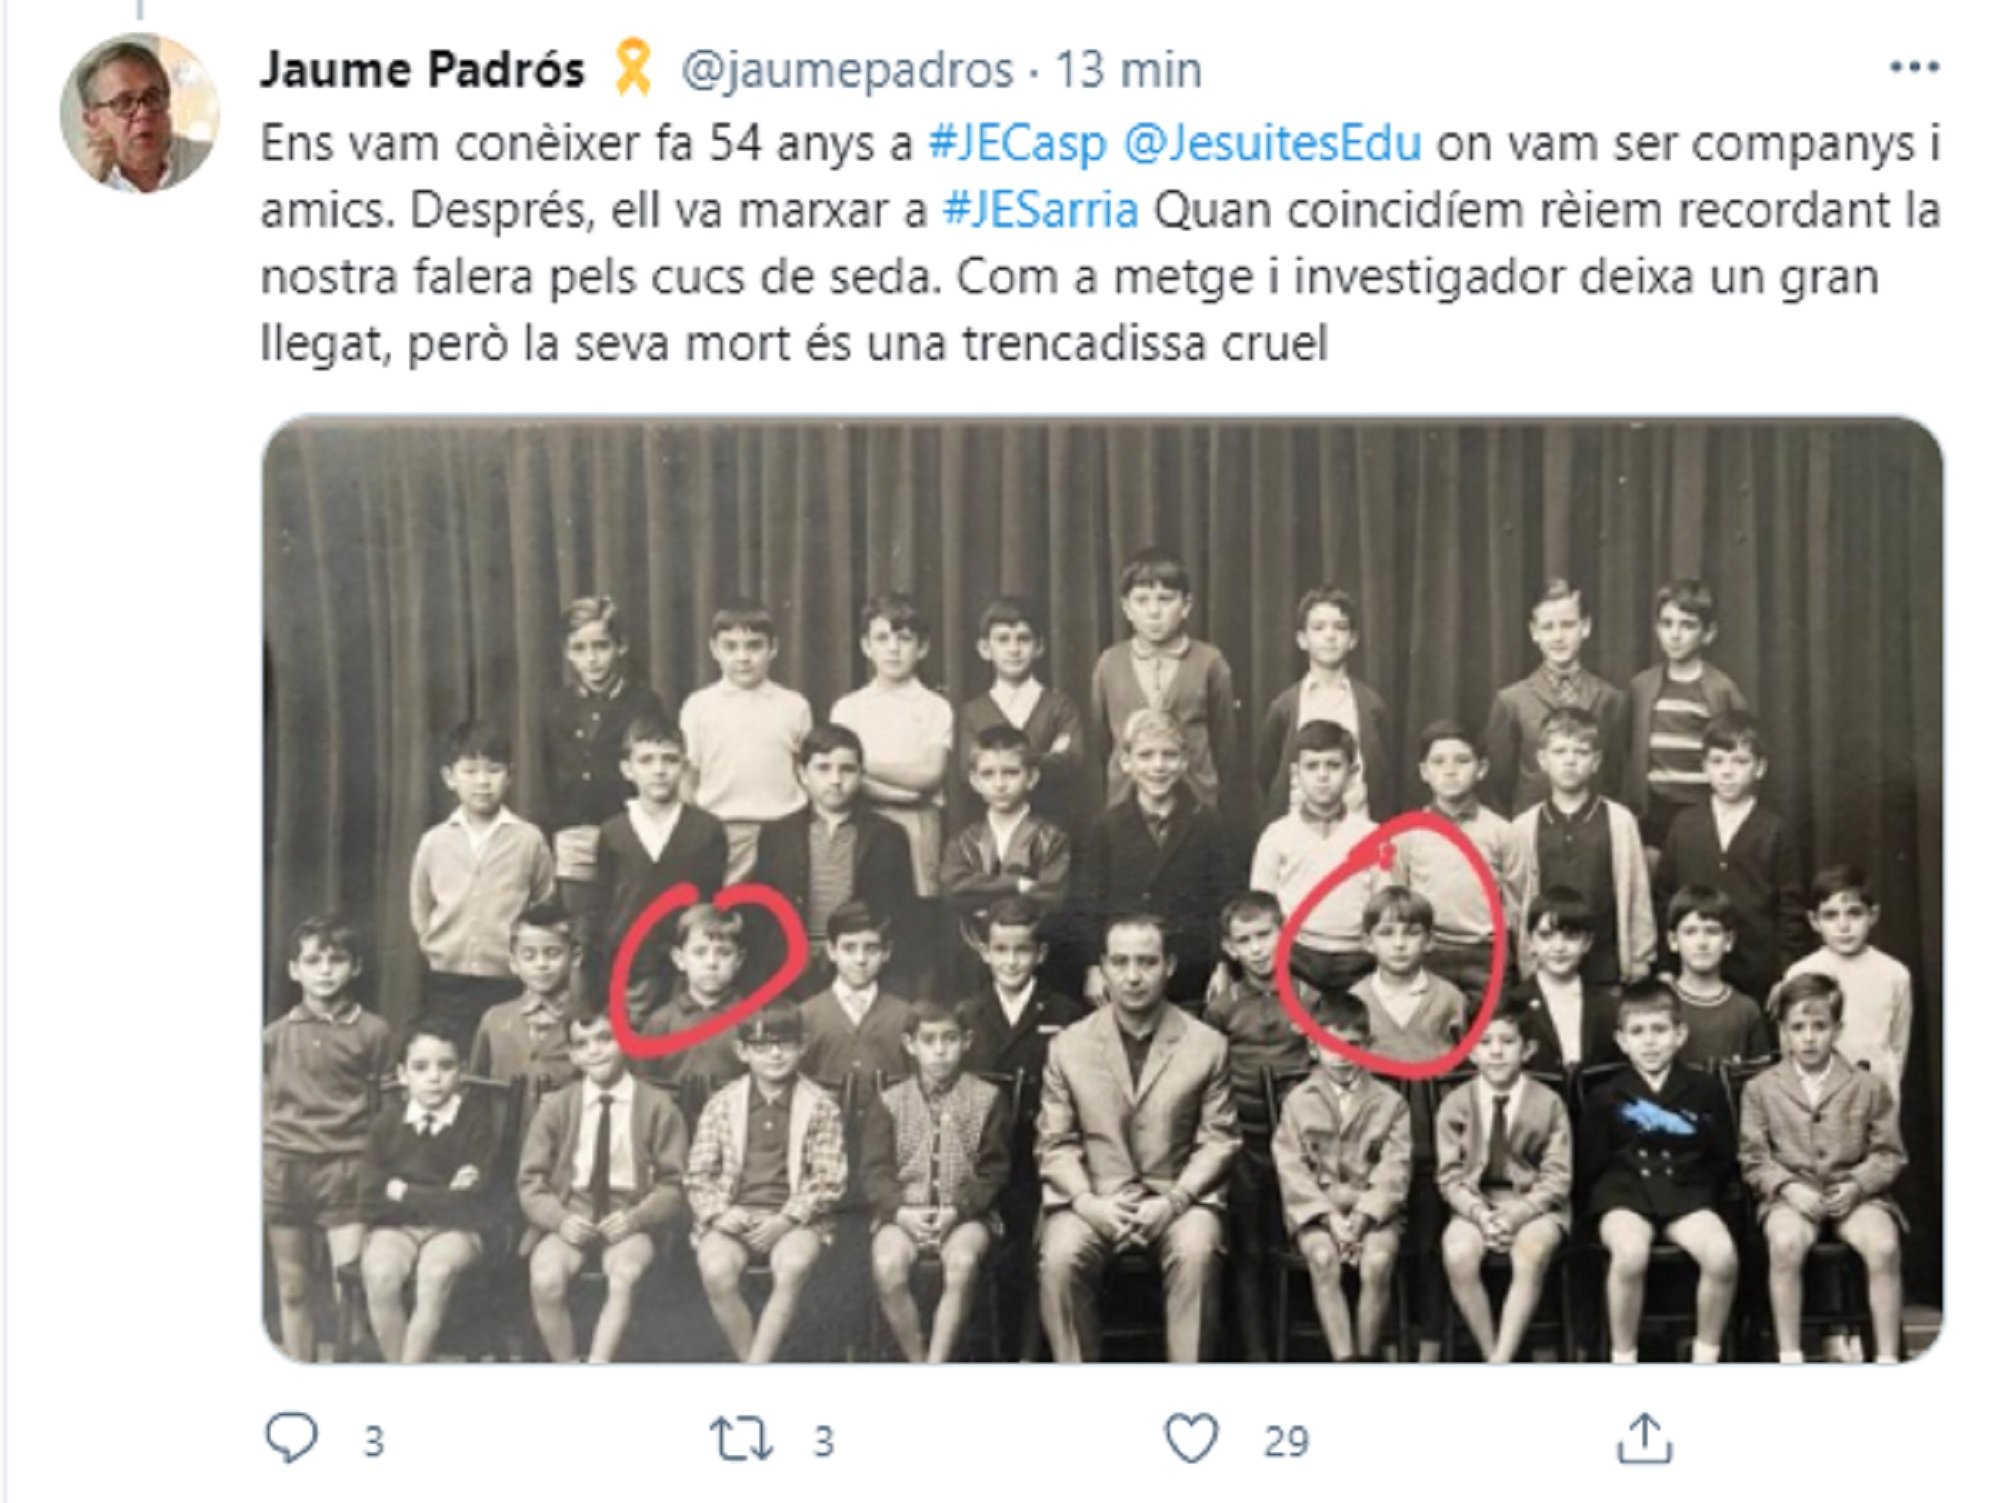 Jaume Padros muerte Josep Baselga oncologo catalán colegio